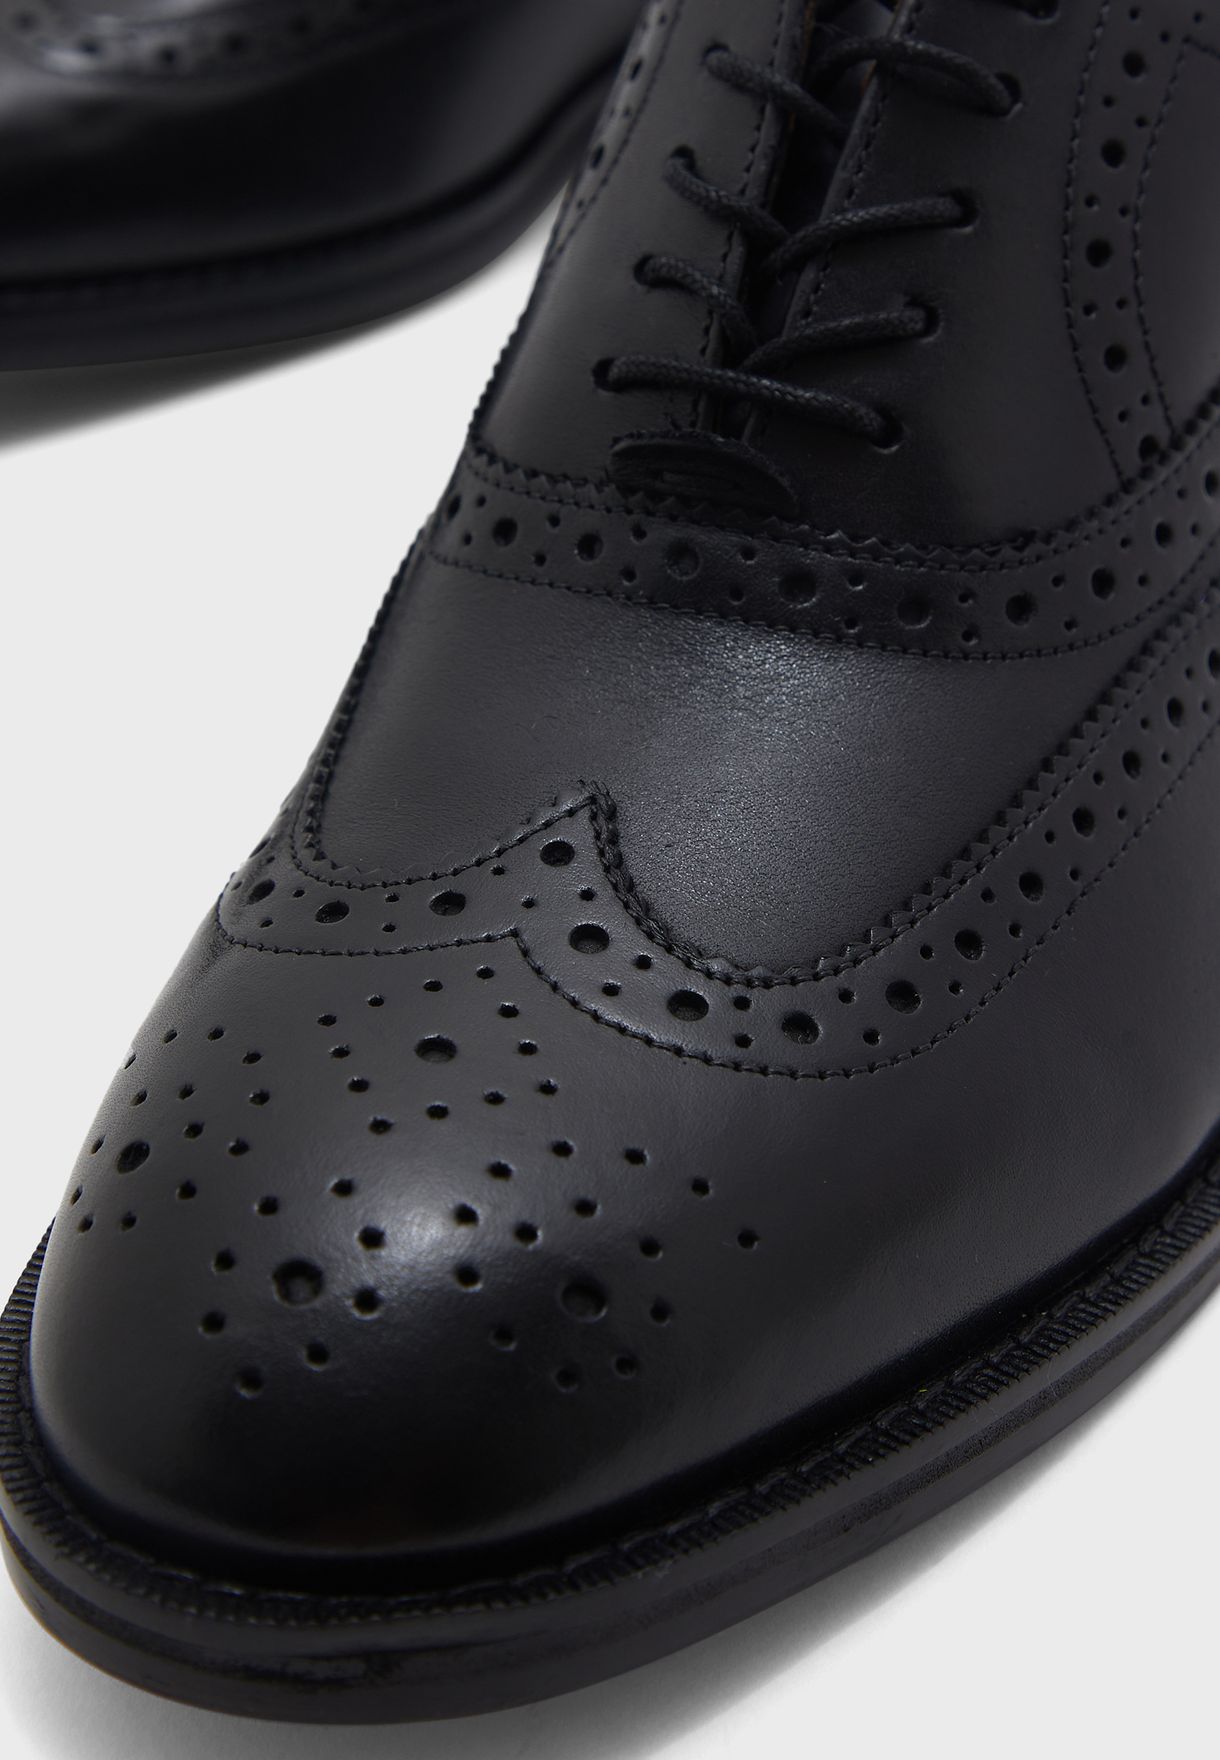 Amaiss Formal Leather Brogue Shoe